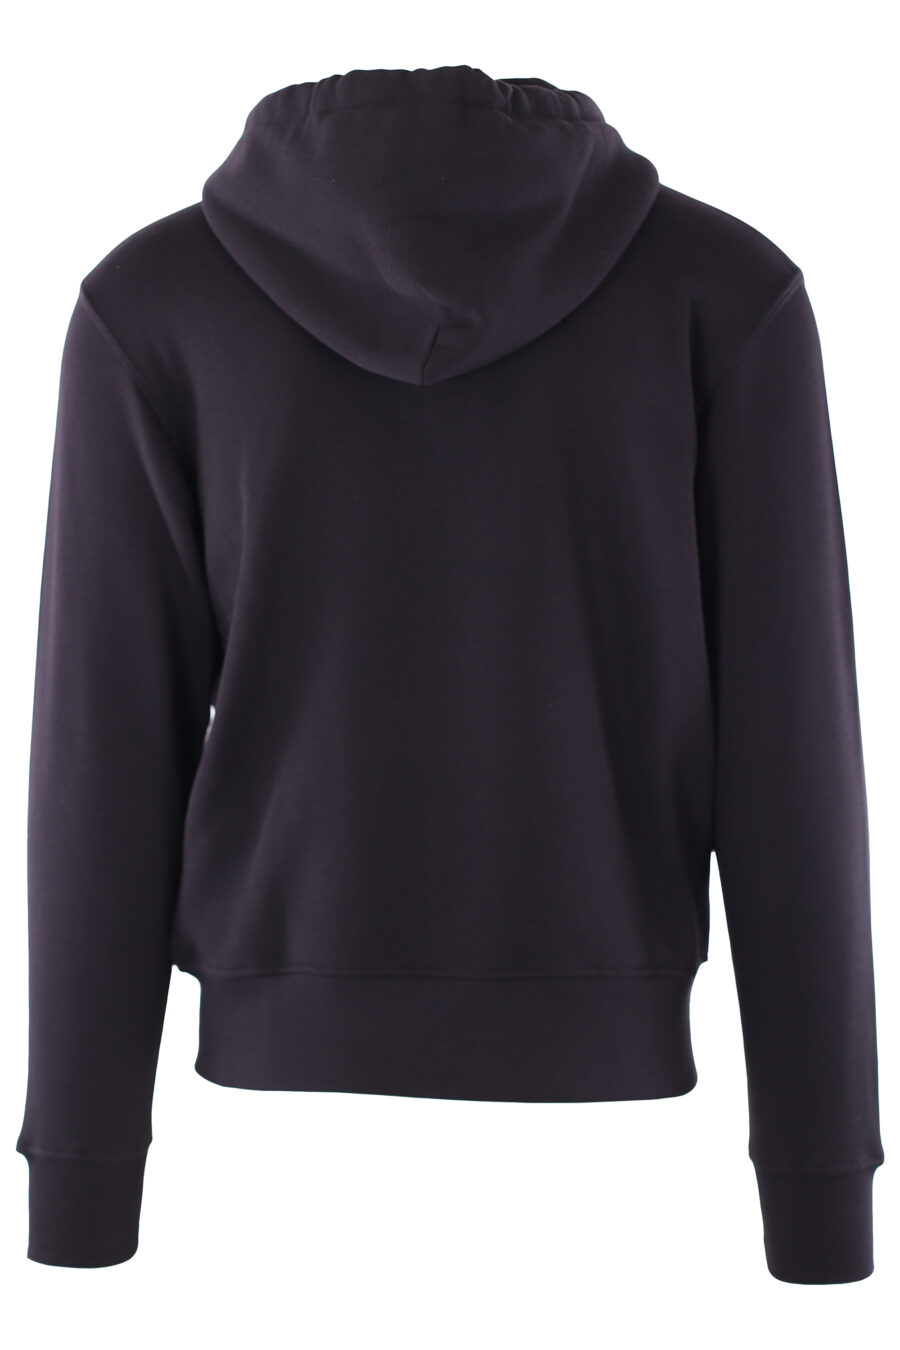 Black sweatshirt with hood and white diagonal logo - IMG 6476